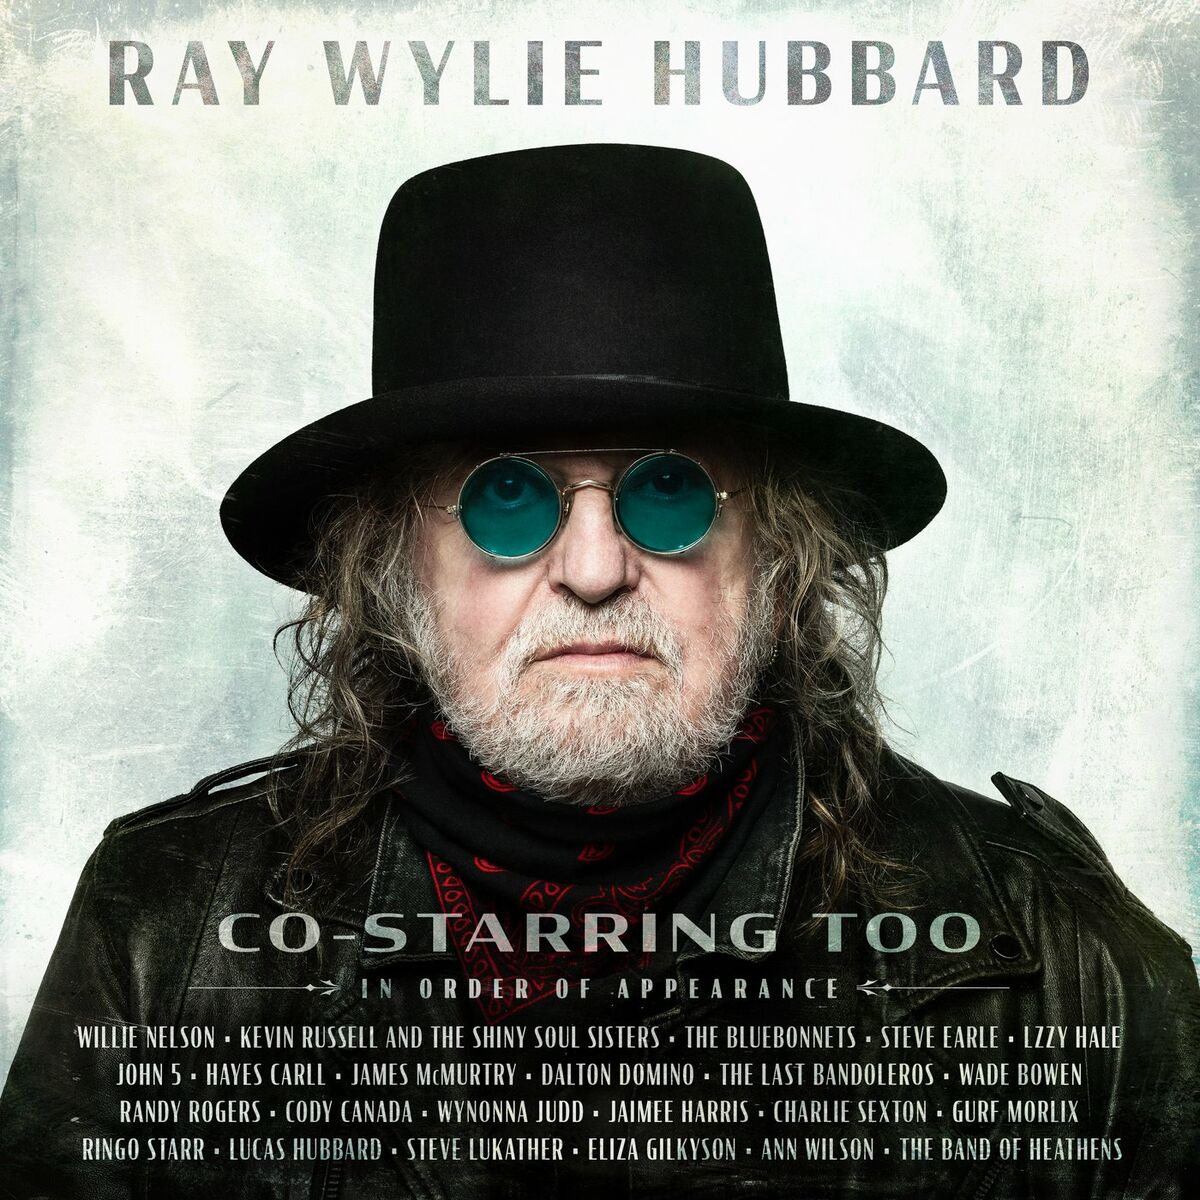 Ray Wylie Hubbard: albums, songs, playlists | Listen on Deezer